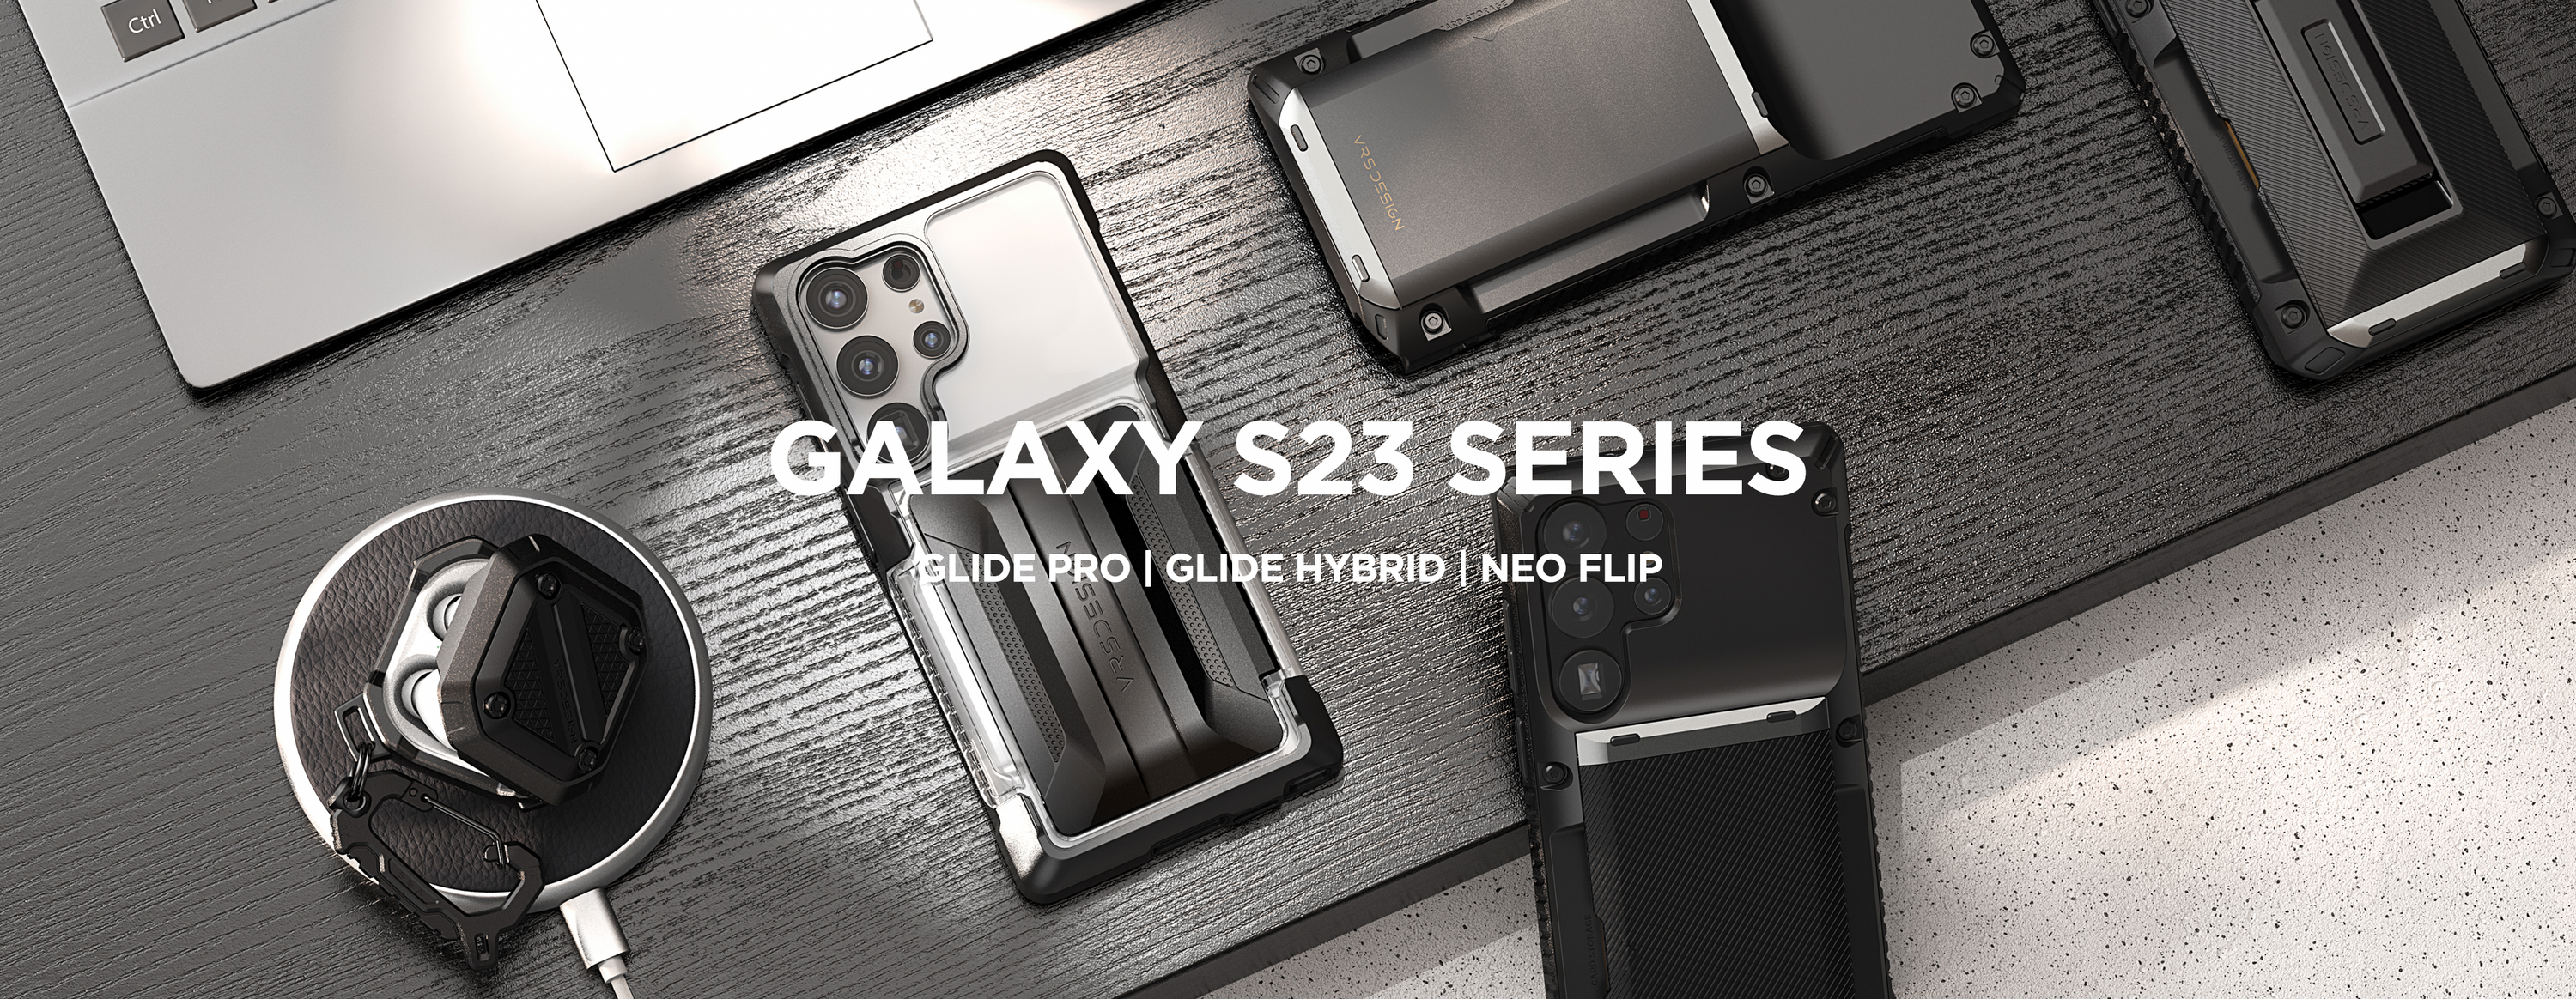 All new Samsung Galaxy S23 BEGINS